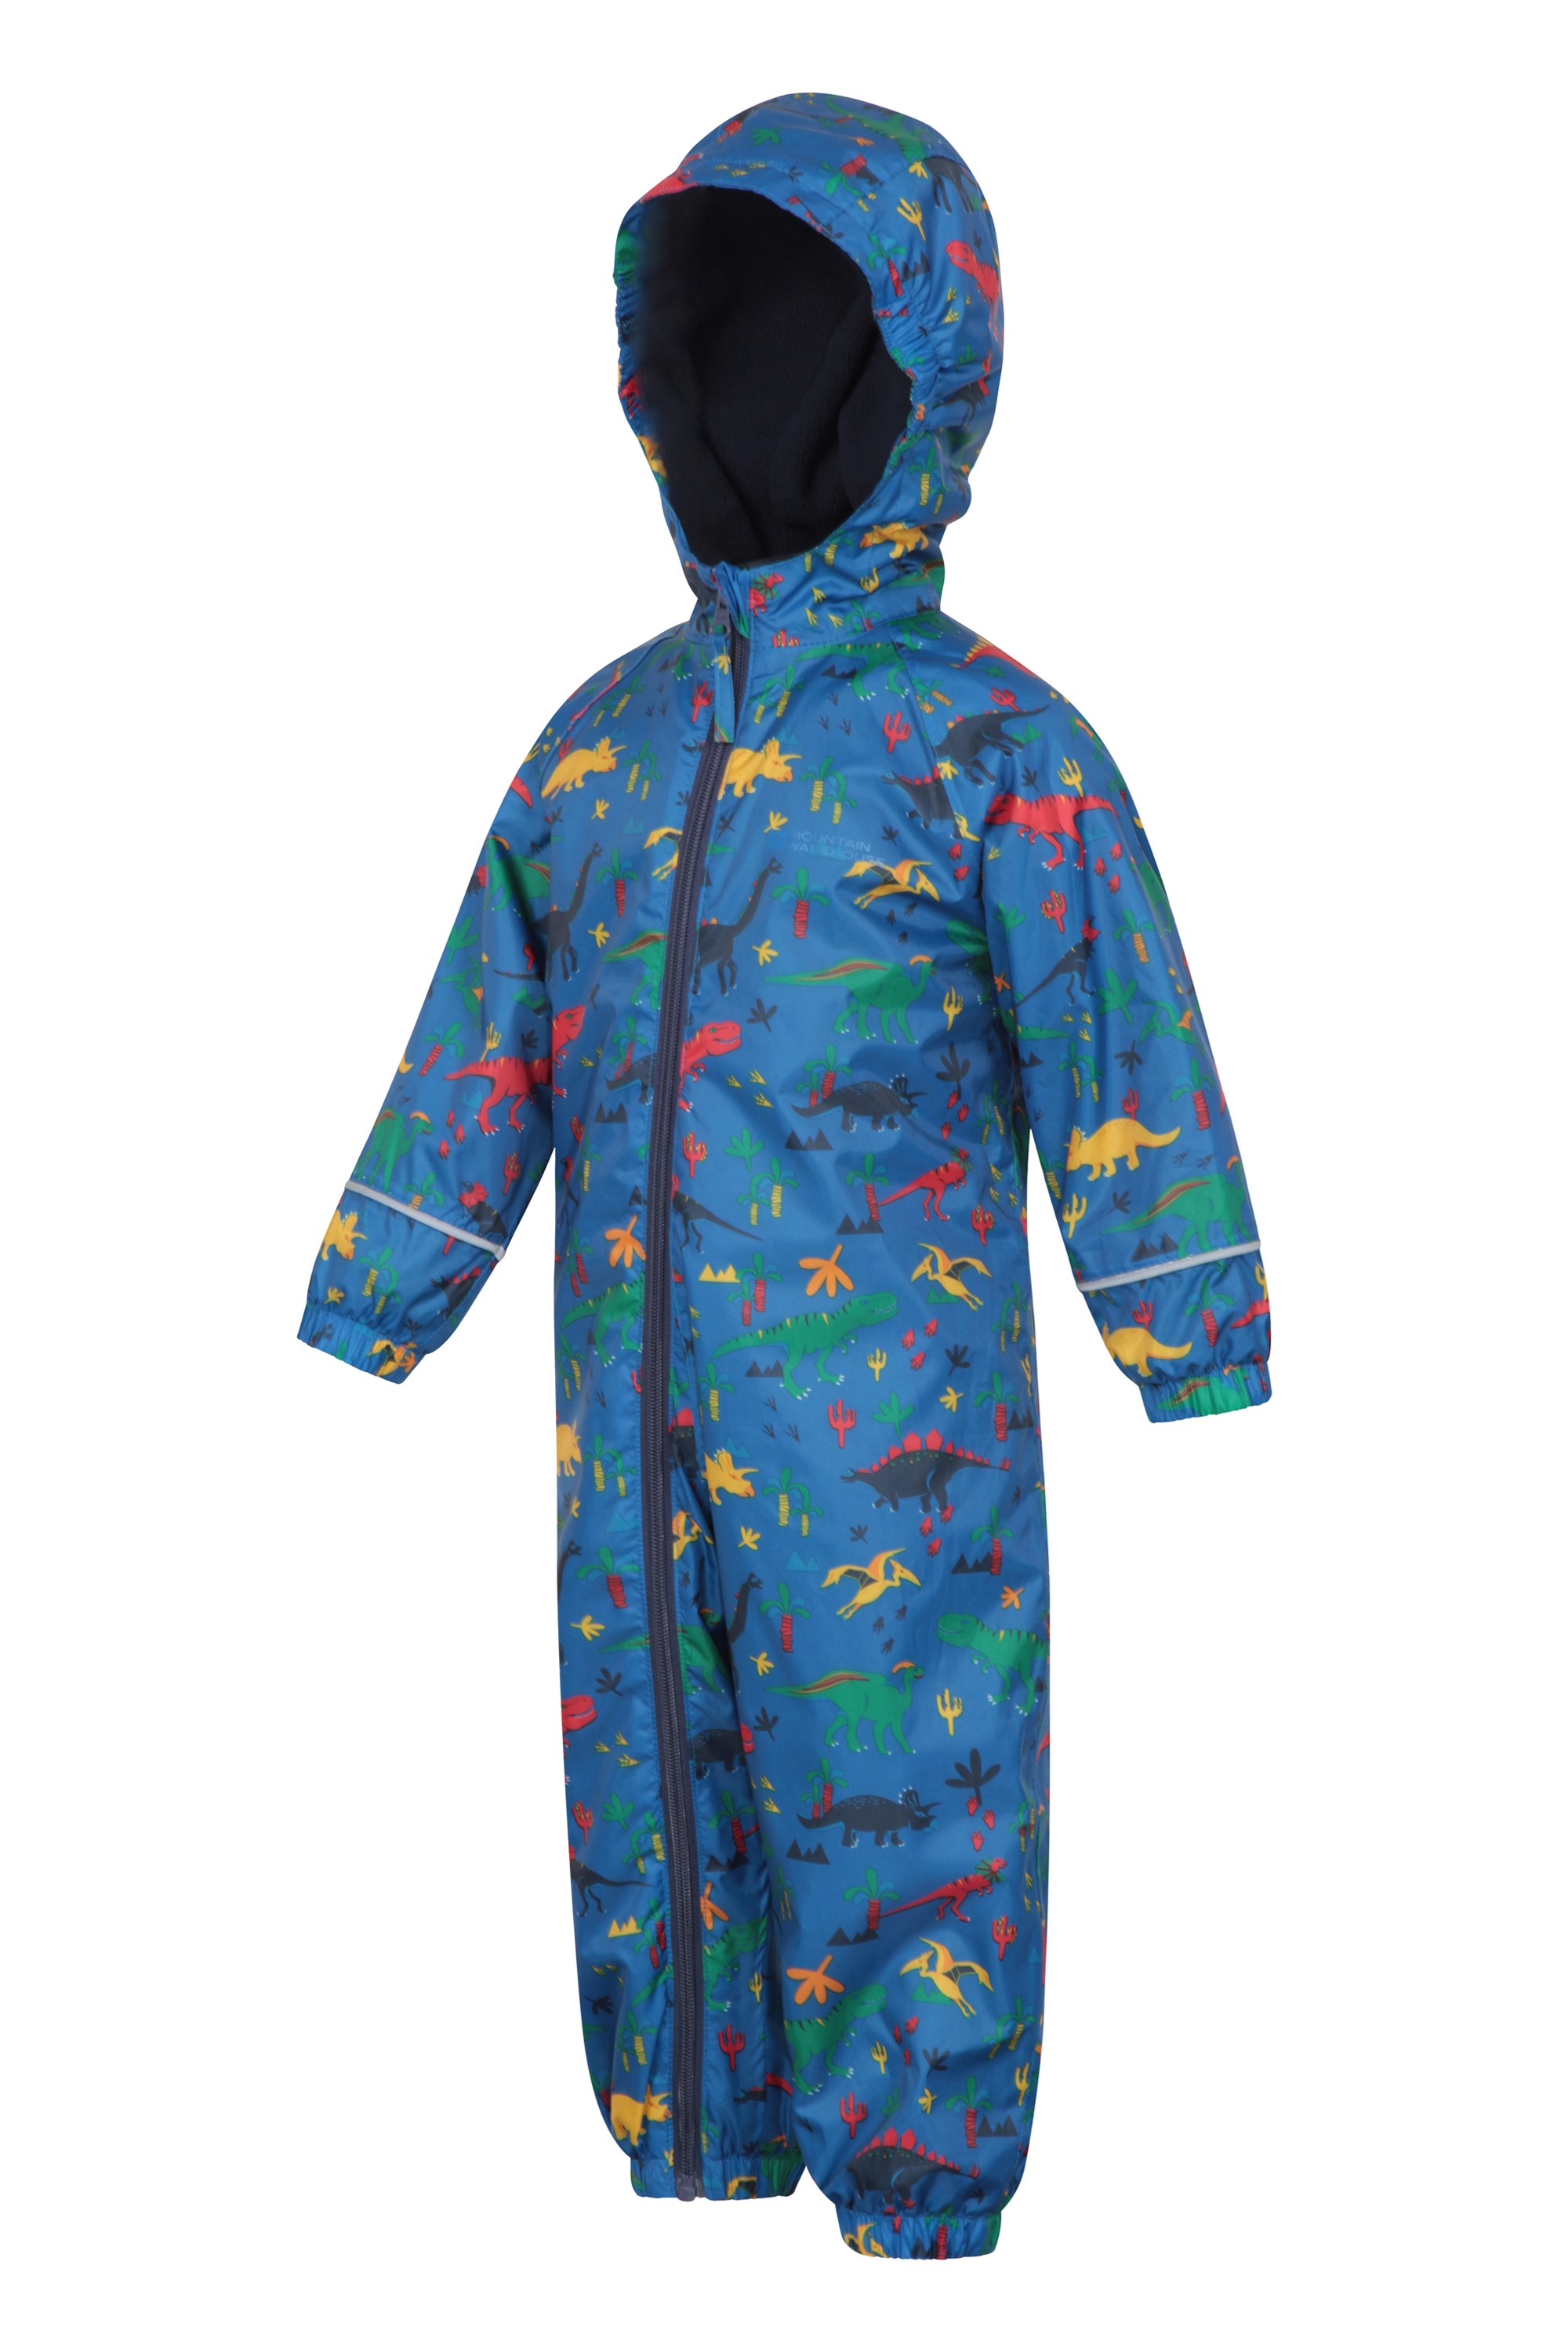 Mountain Warehouse Mountain Warehouse Kids Waterproof Rain Suit Junior Spright Printed Toddler 